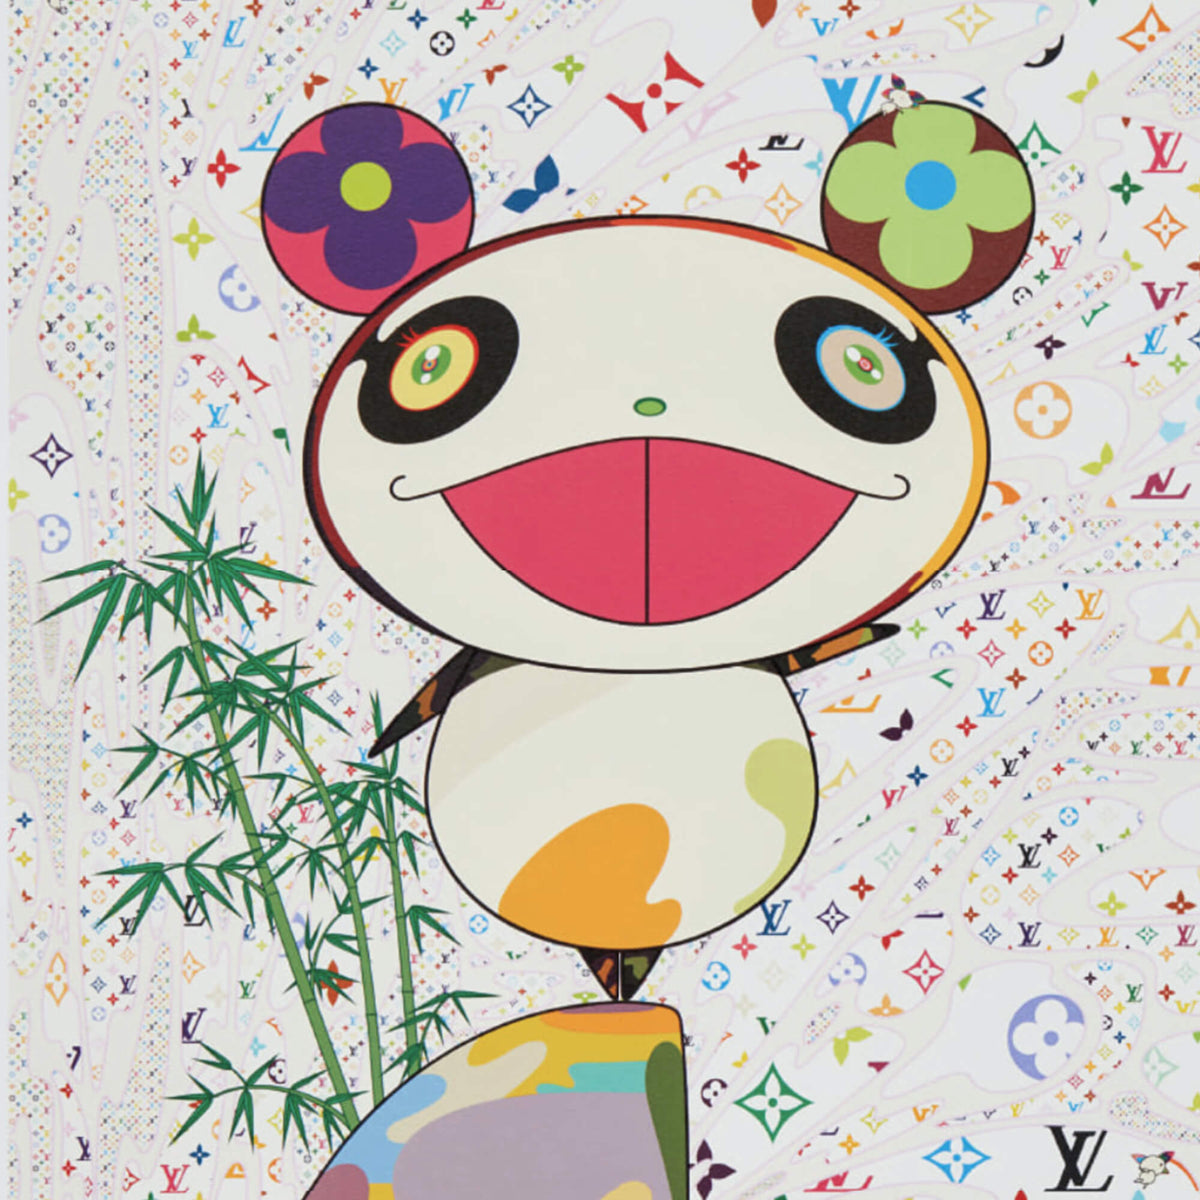 Louis Vuitton, Murakami Animate Superflat First Love (Updated